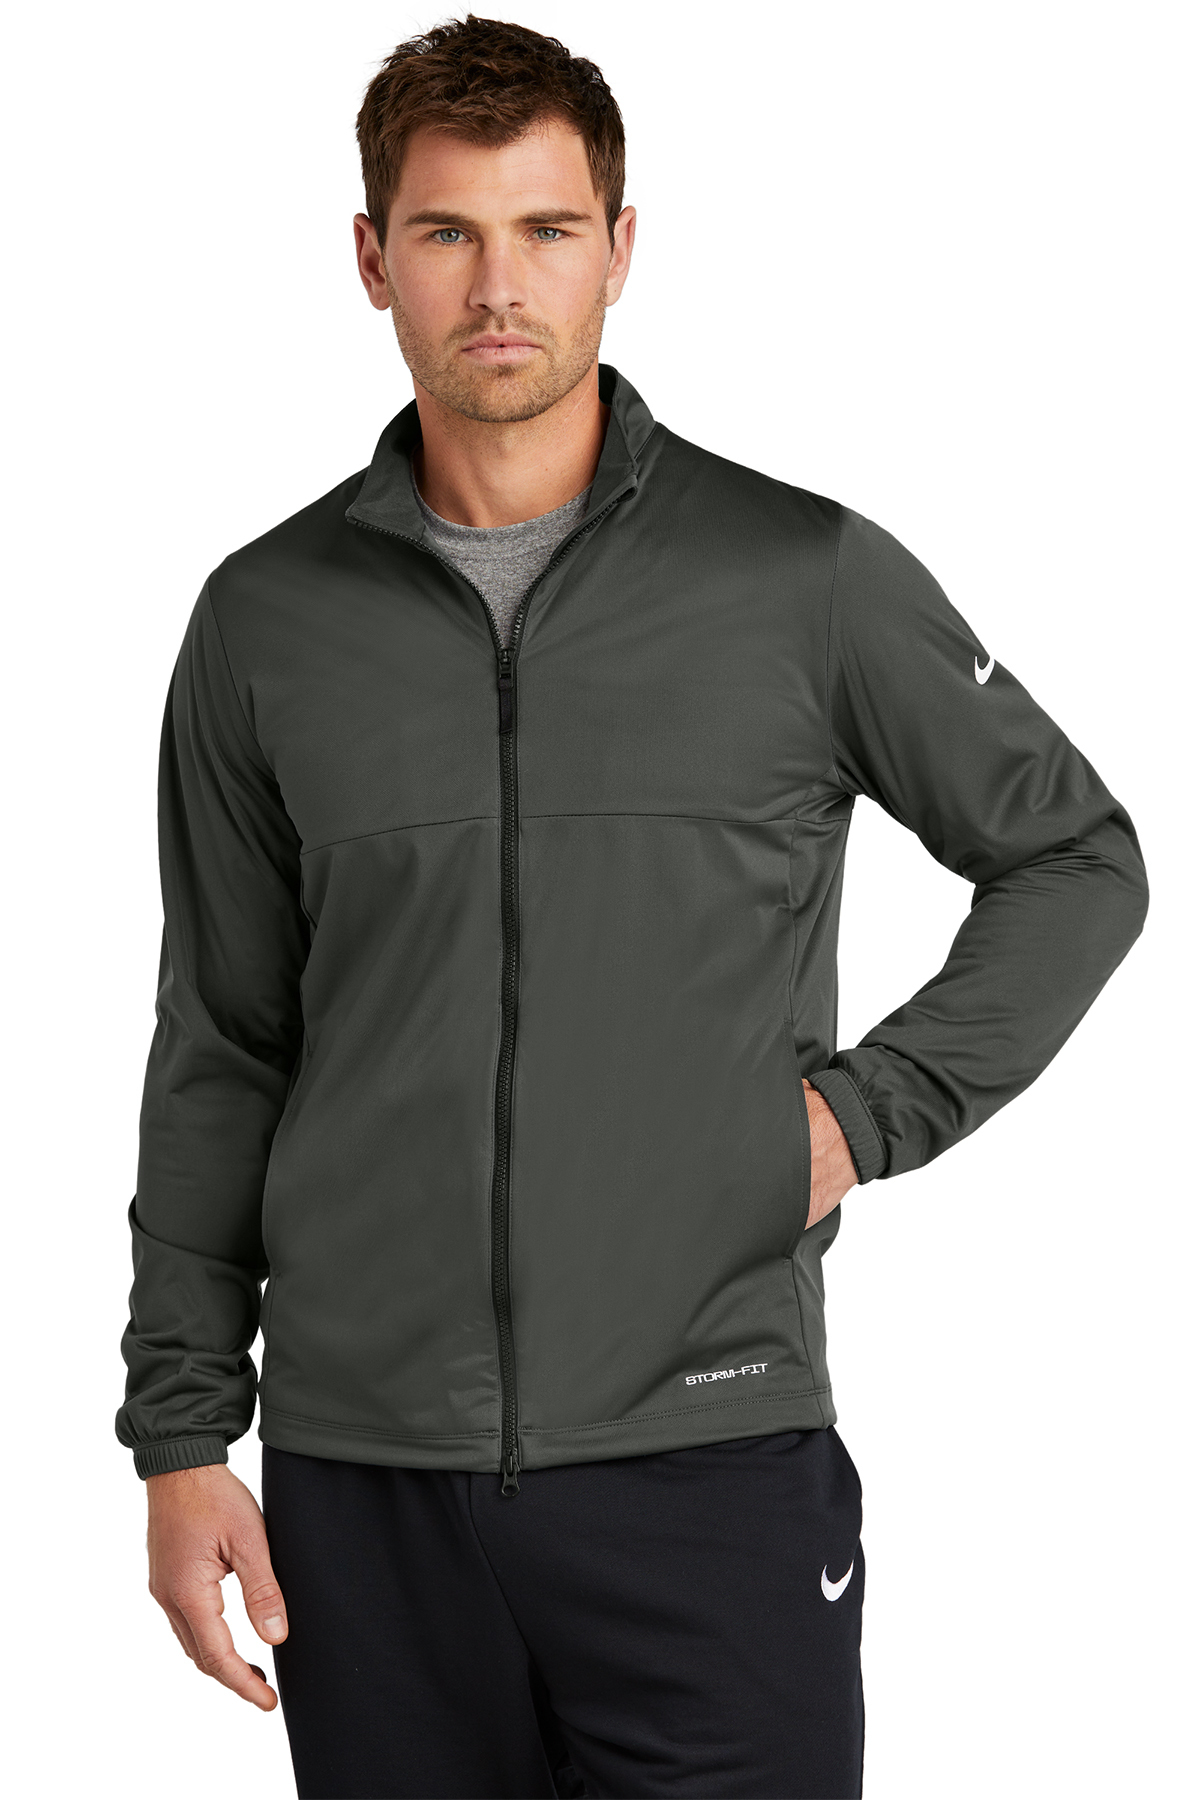 Nike Storm-FIT Jacket | Product | SanMar